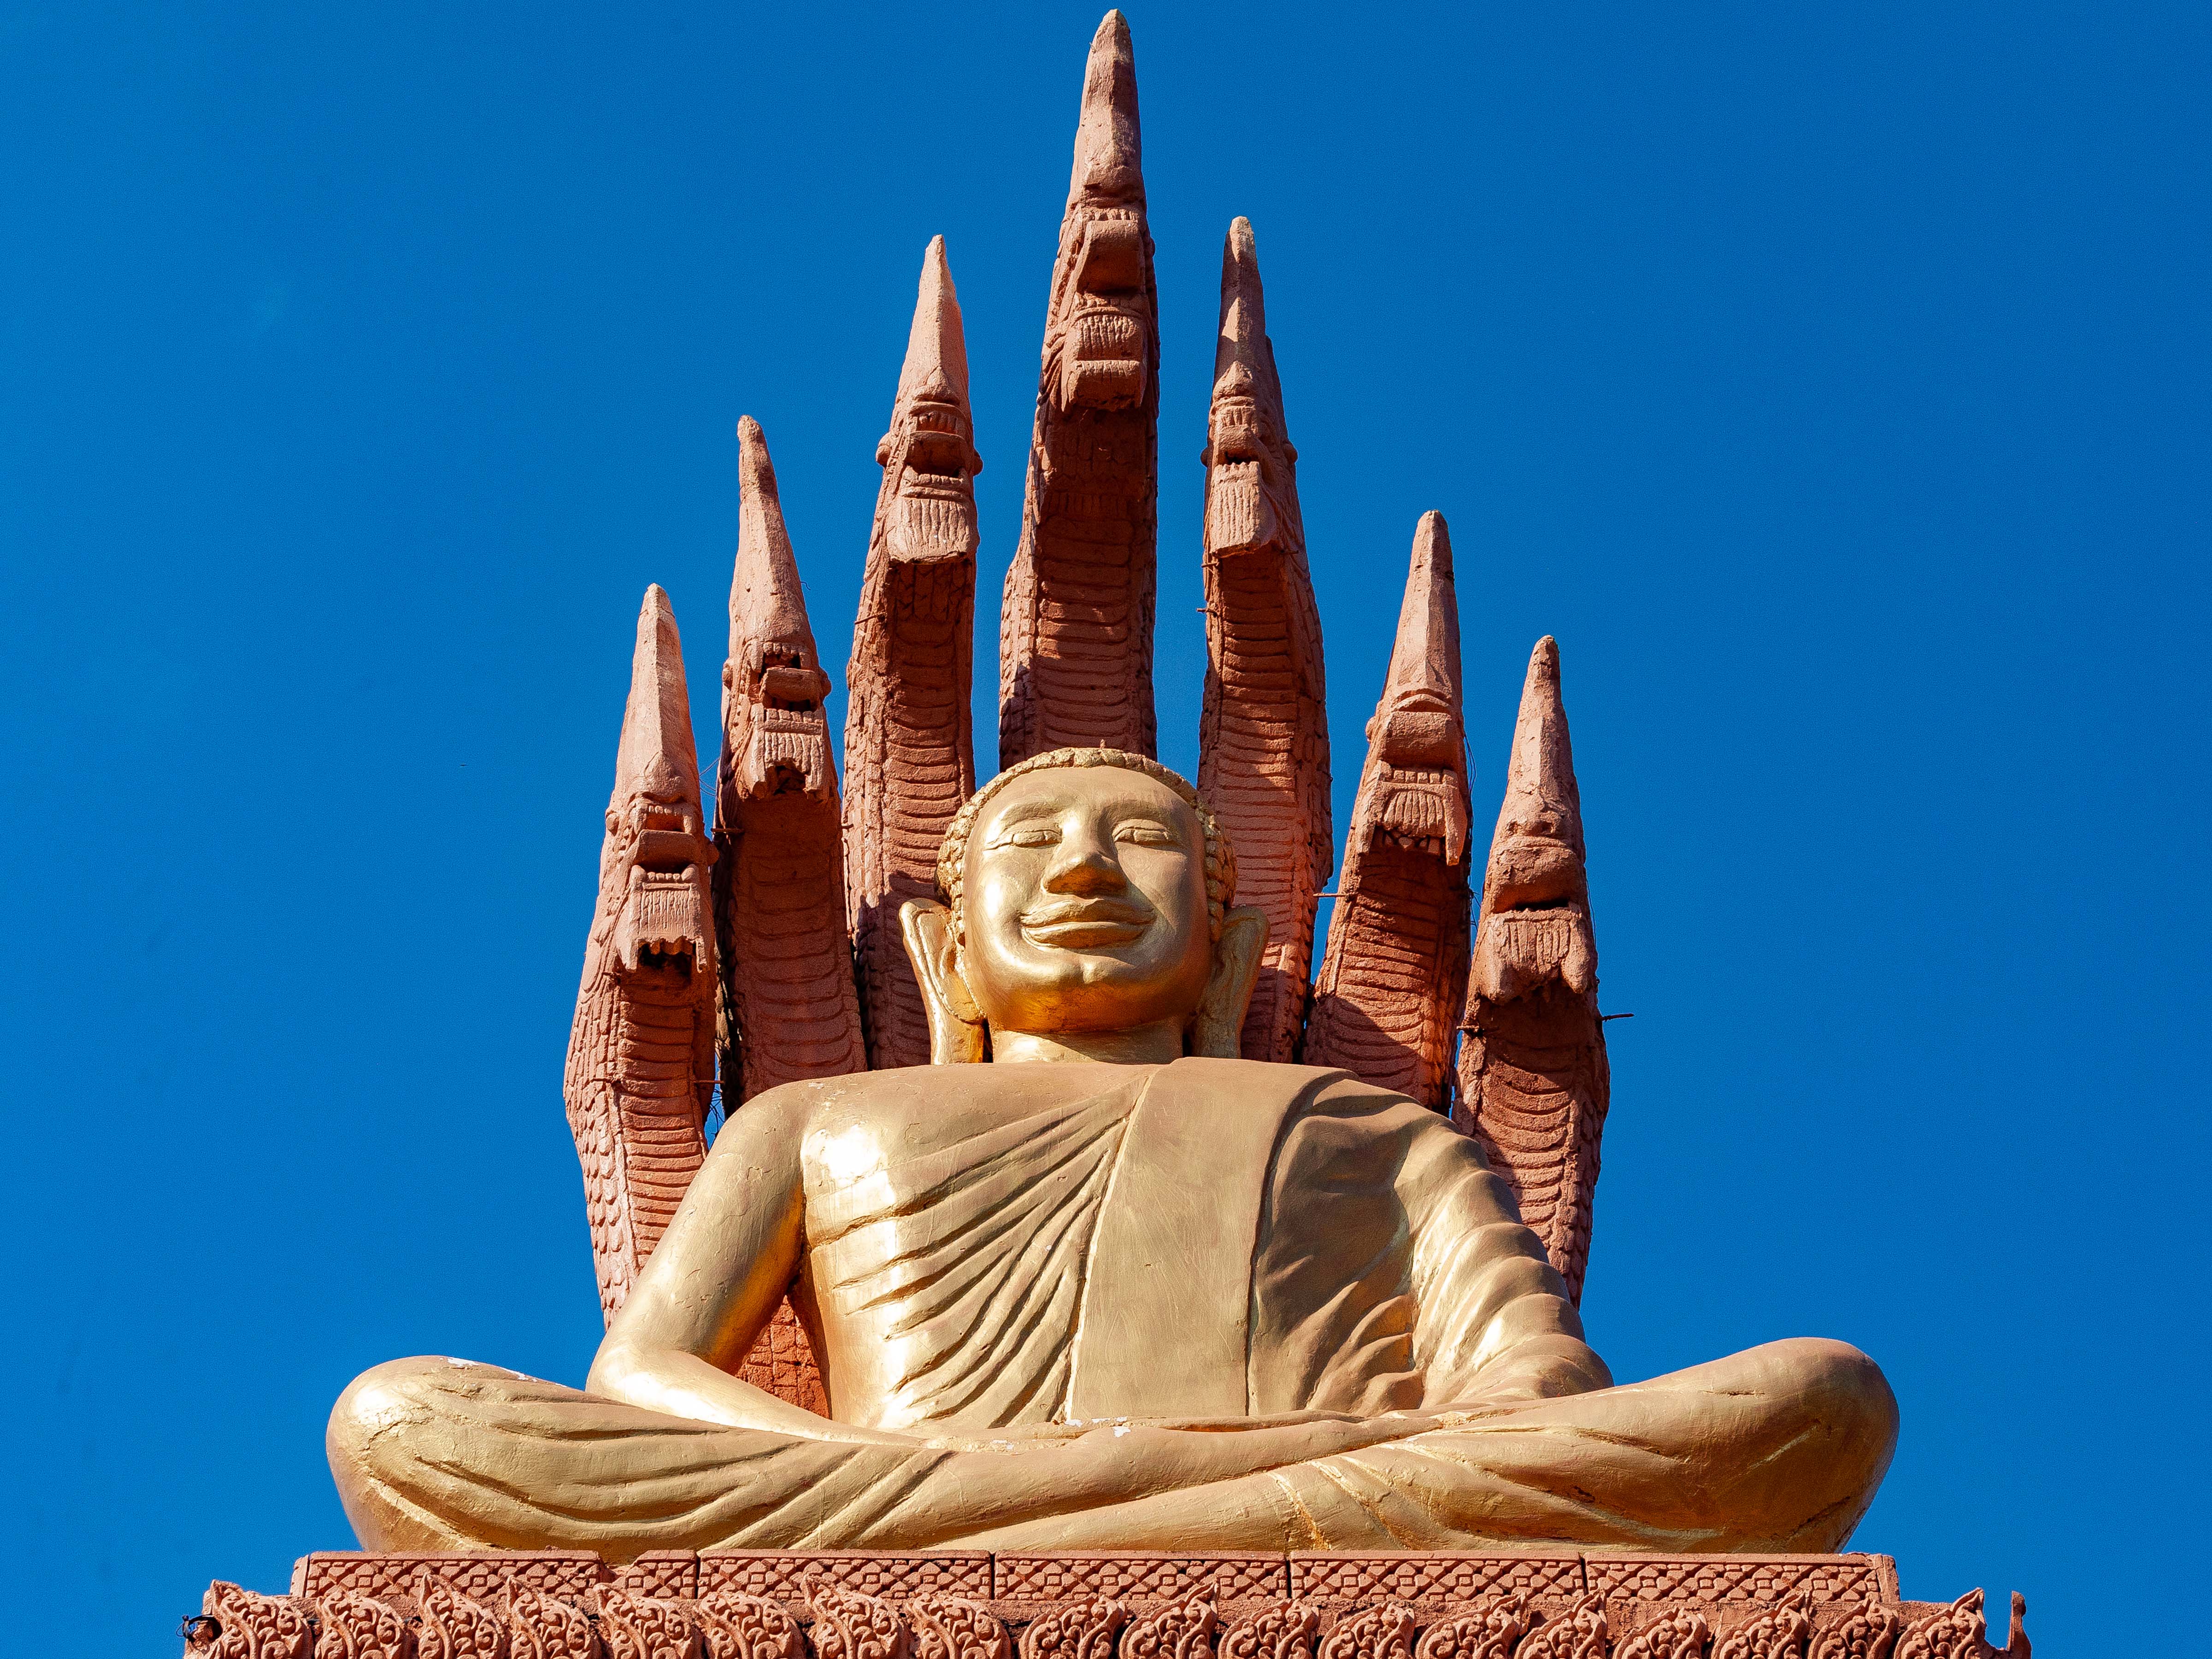 Cambodia, Kampot Prov, Temple Buddha, 2010, IMG 4929